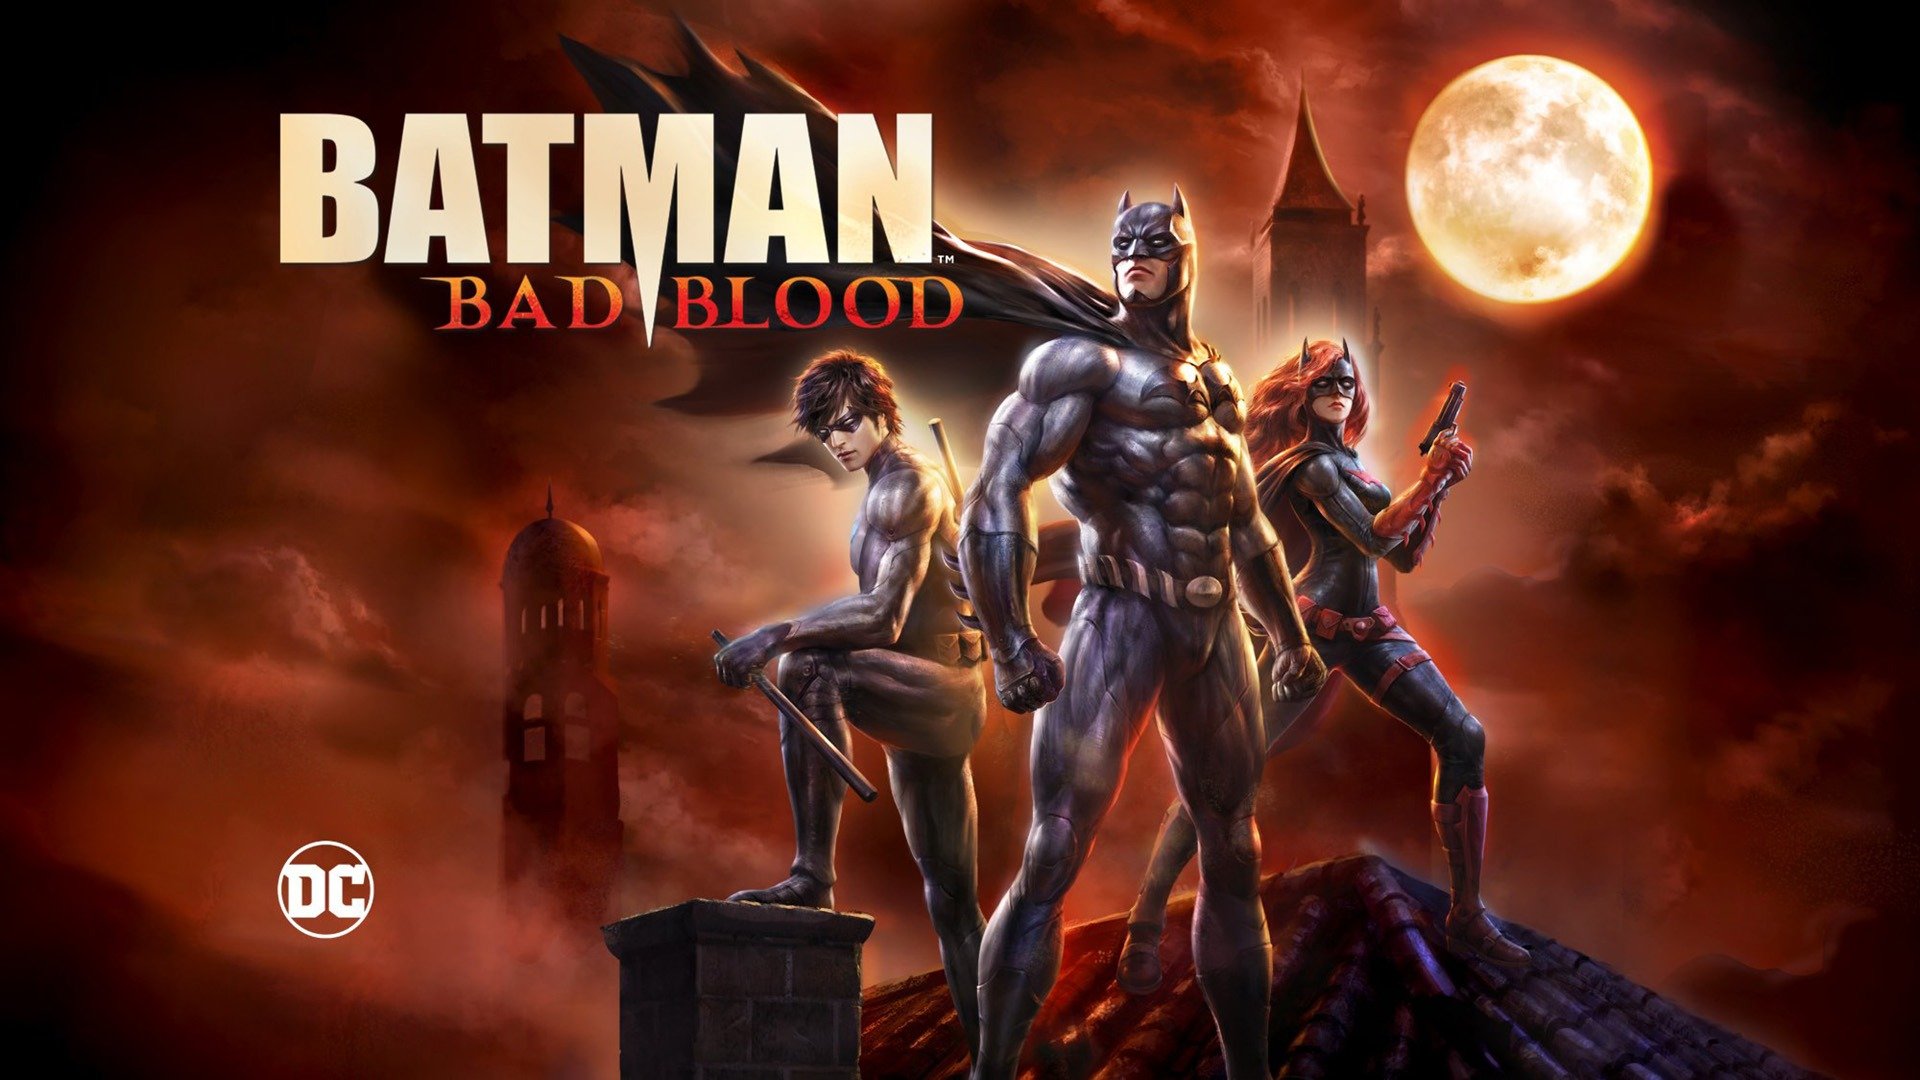 Bad batman. Бэтмен: дурная кровь (2016). Бэтмен дурная кровь Бэтвумен. Бэтмен дурная кровь Бэтвинг. Бэтмен дурная кровь Постер.